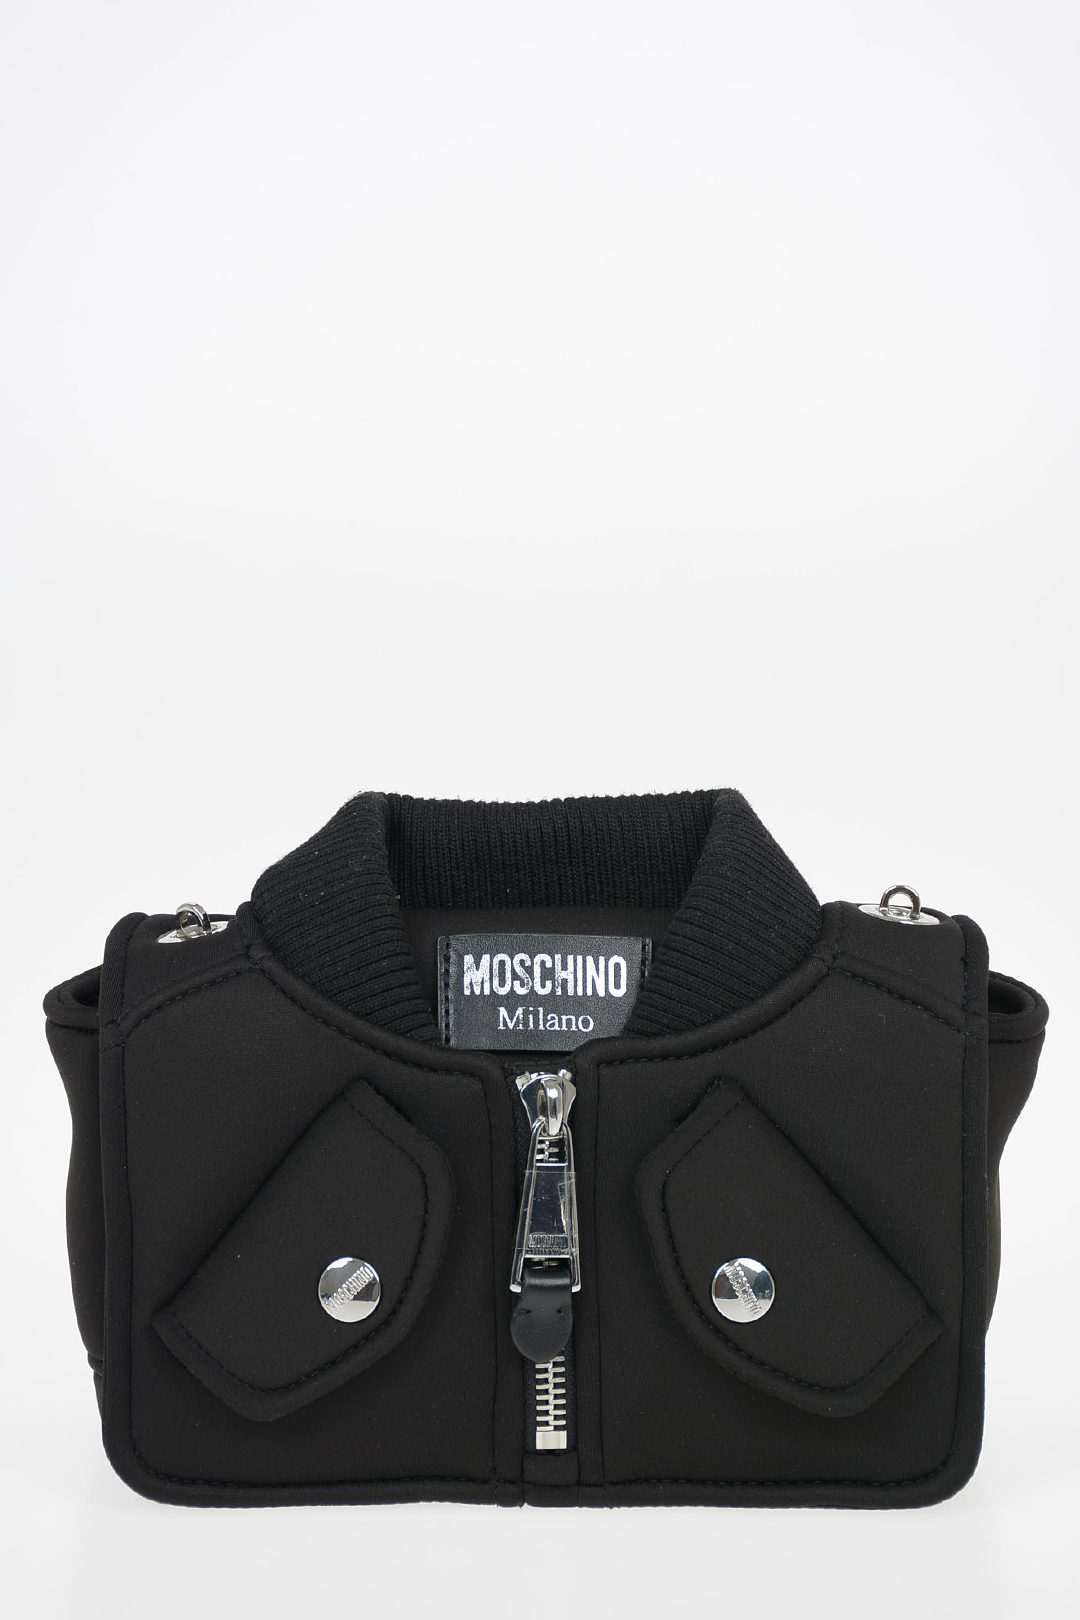 moschino bomber jacket bag